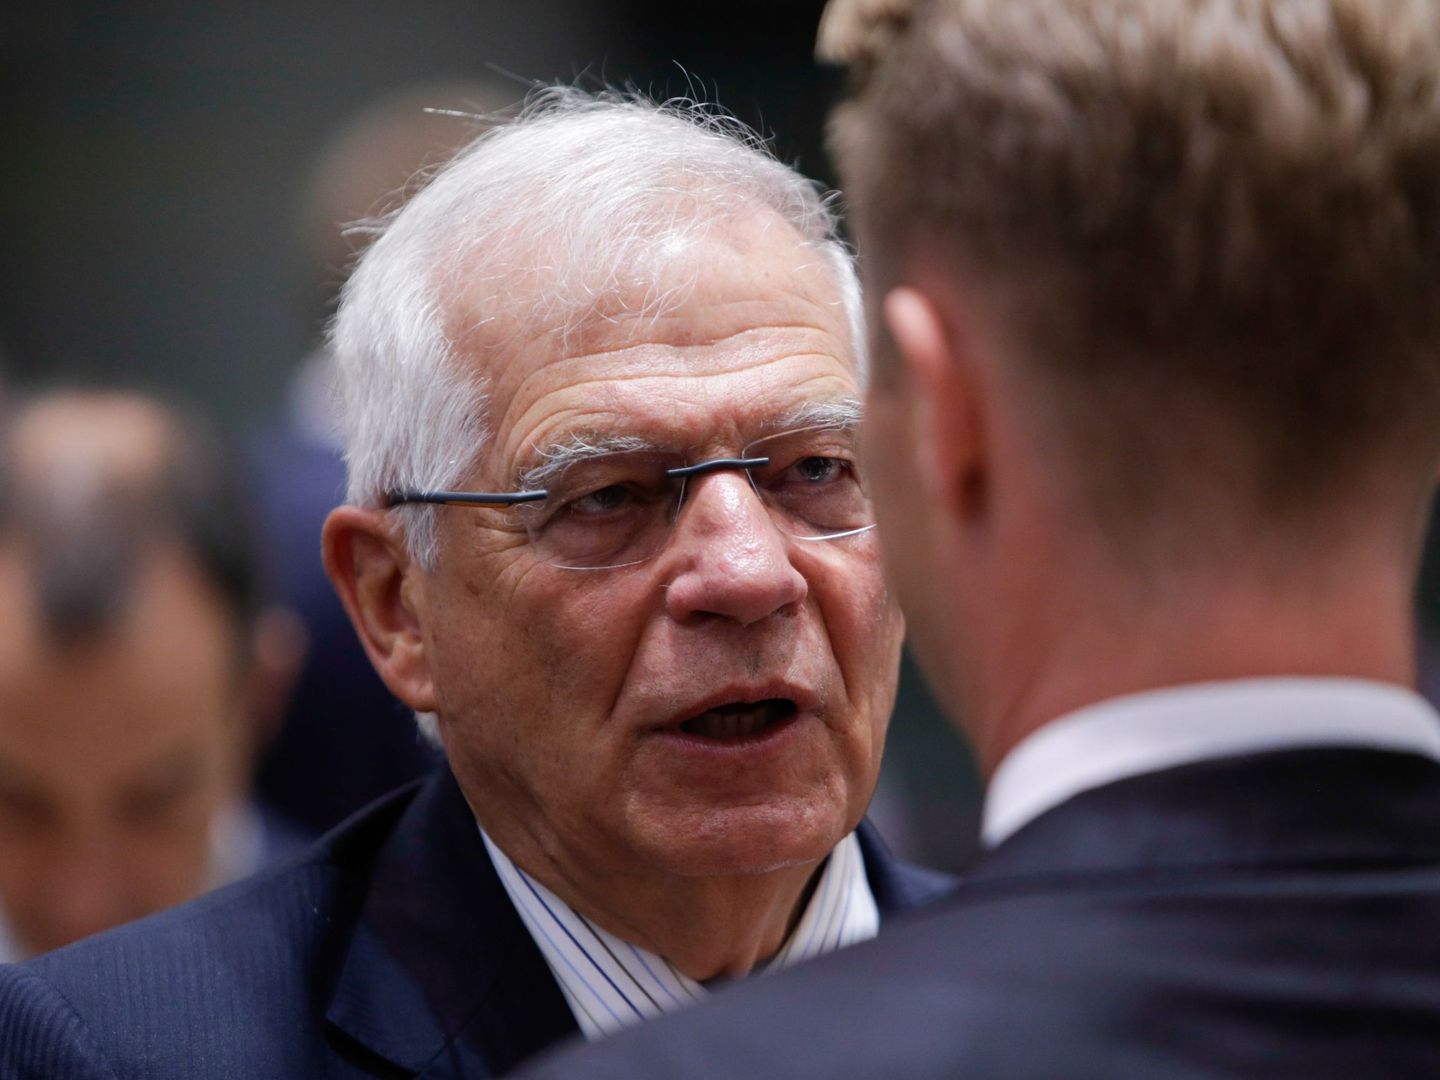 El ministro de Exteriores en funciones, Josep Borrell. (EFE)